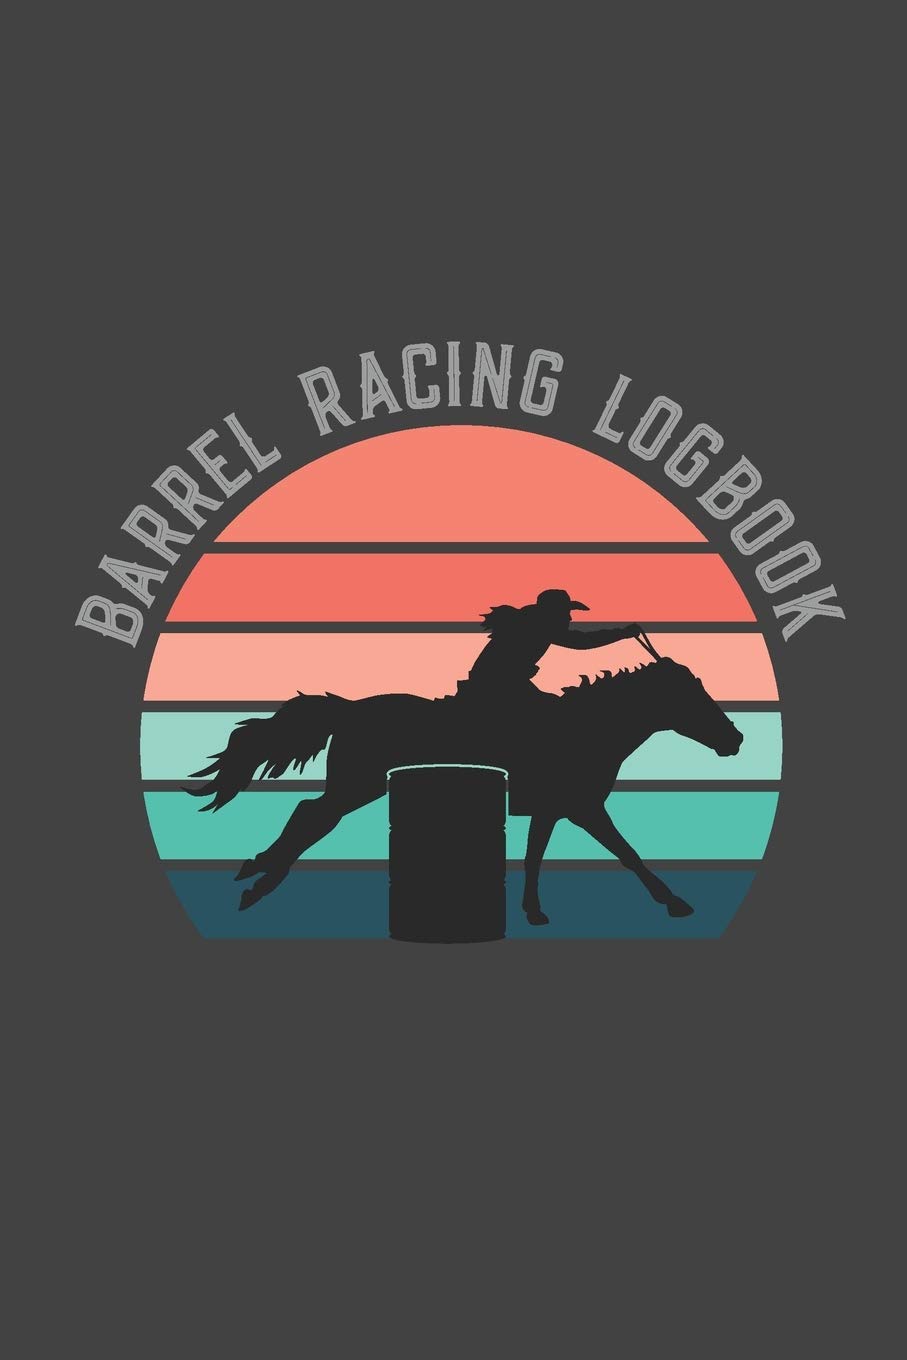 Barrel Racing Pictures  Download Free Images on Unsplash